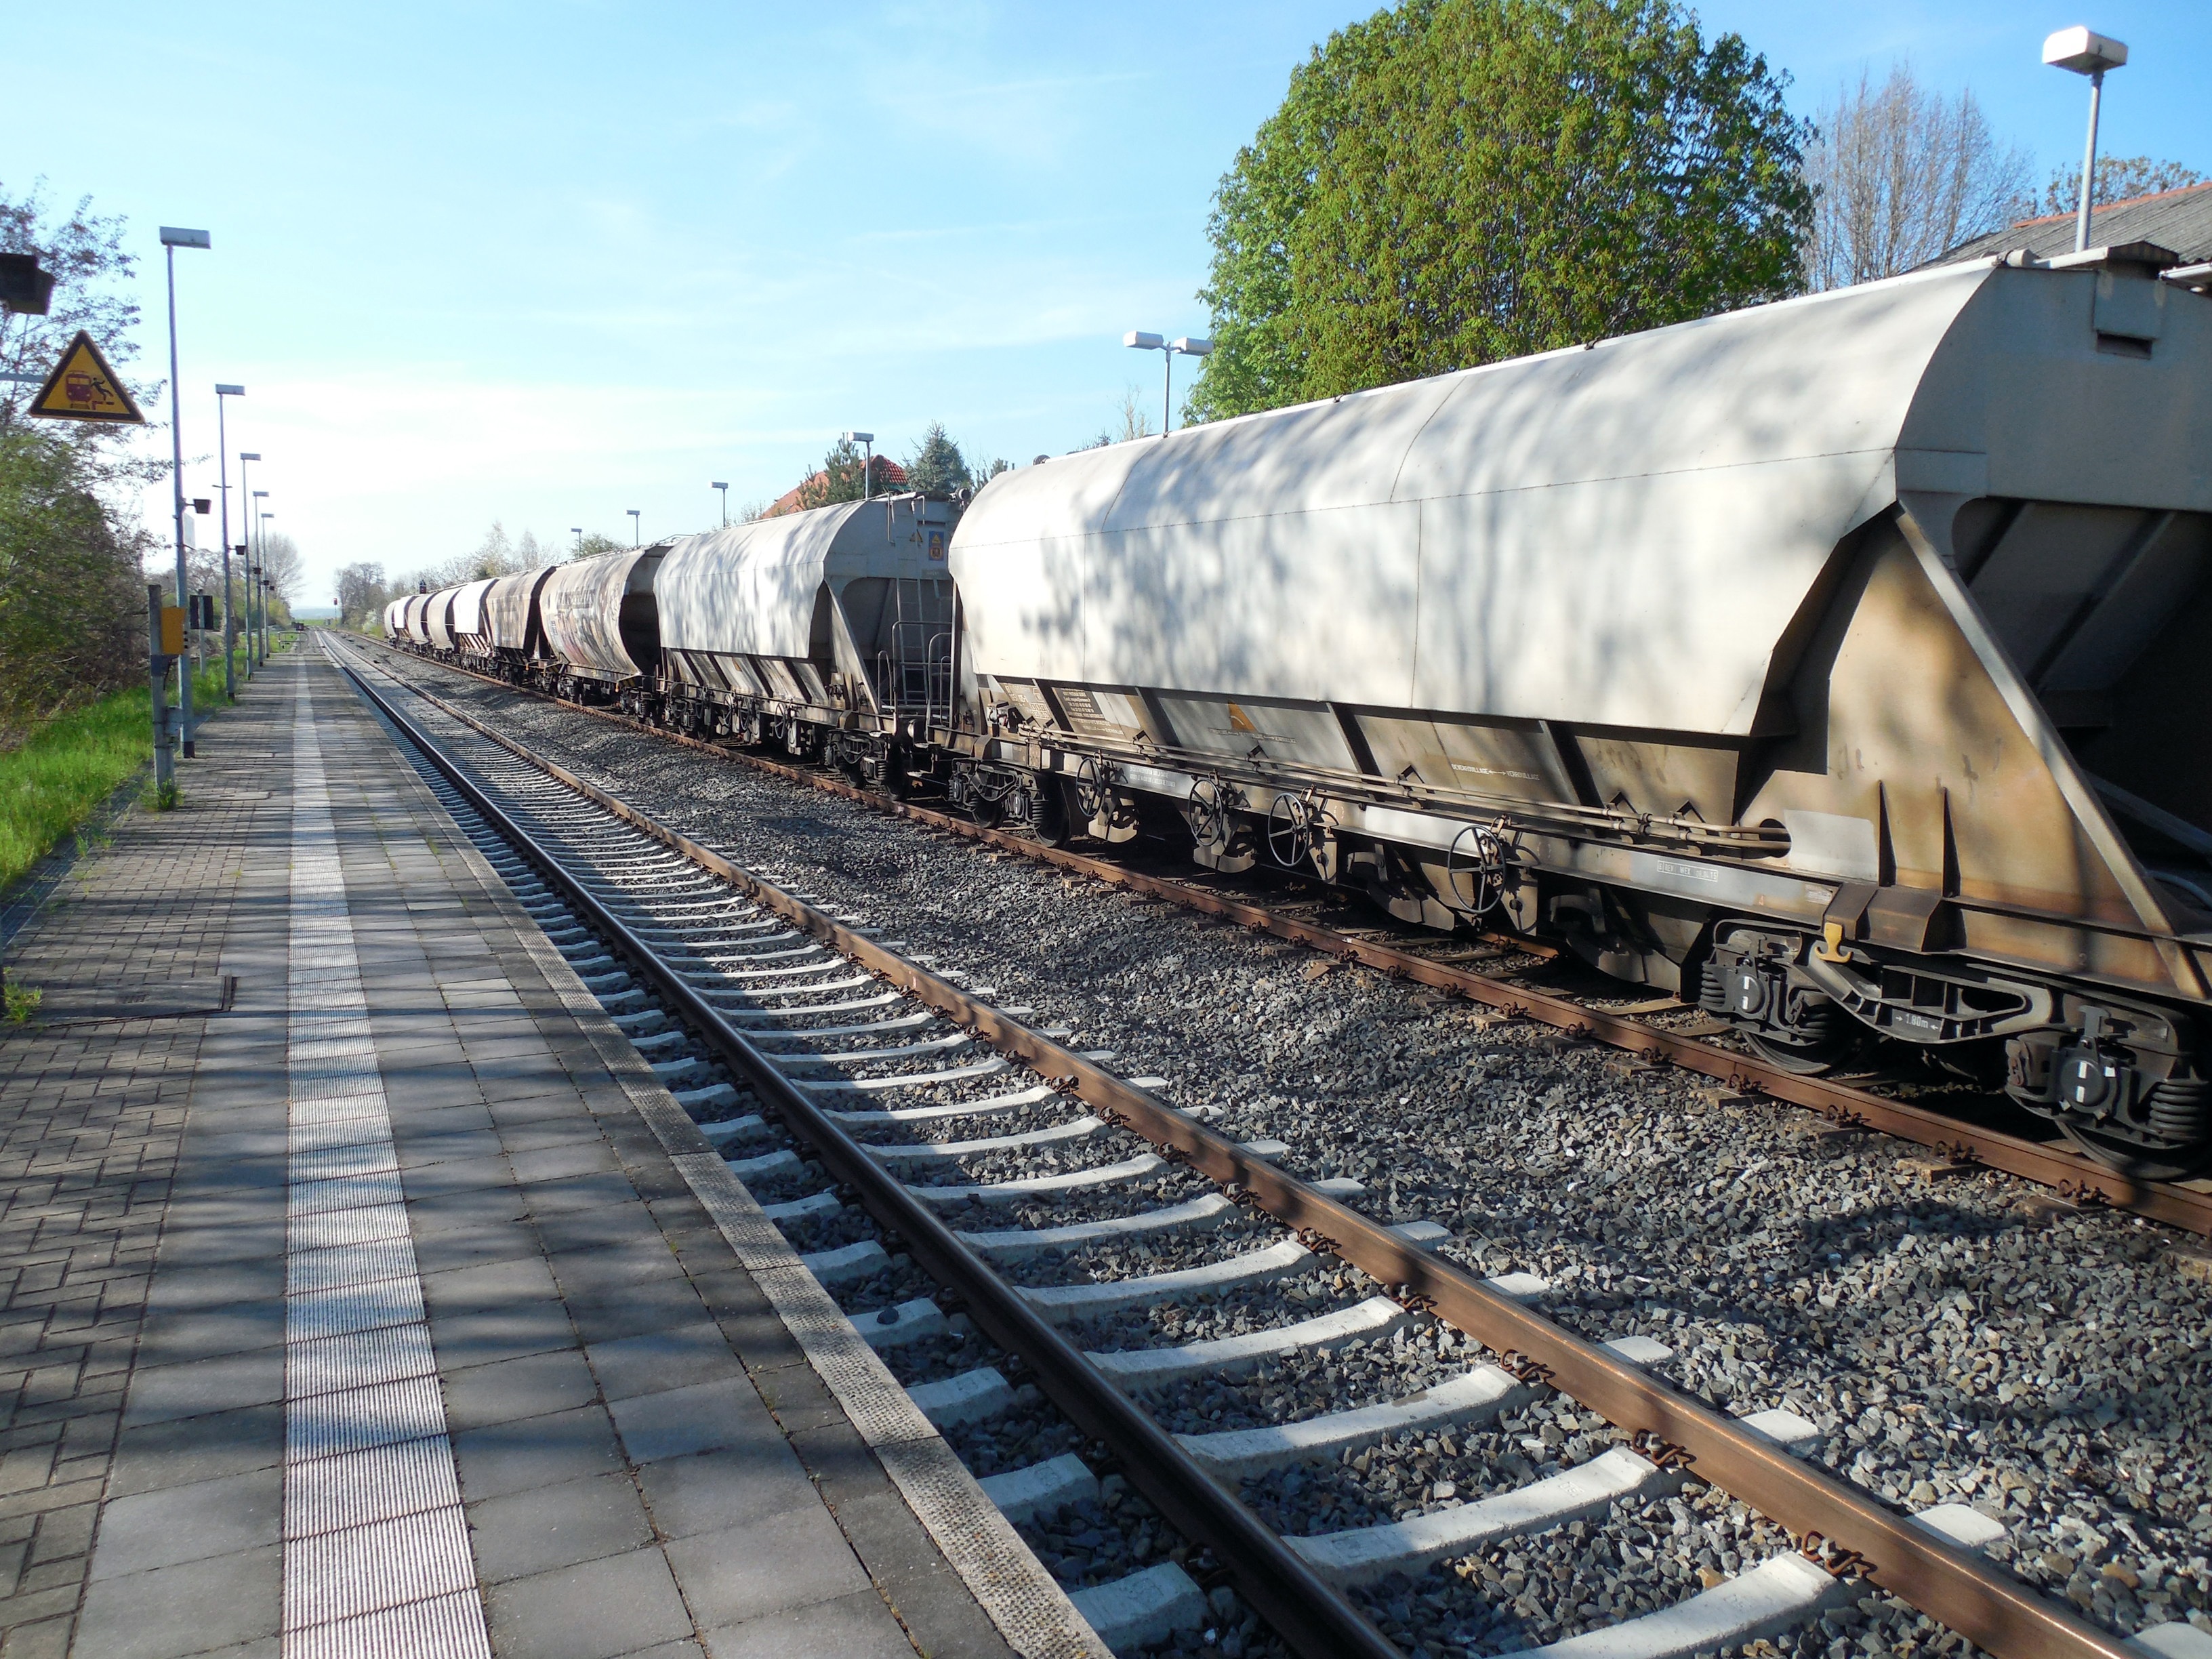 vehicles, railroad, train, train station, vehicle, freight train